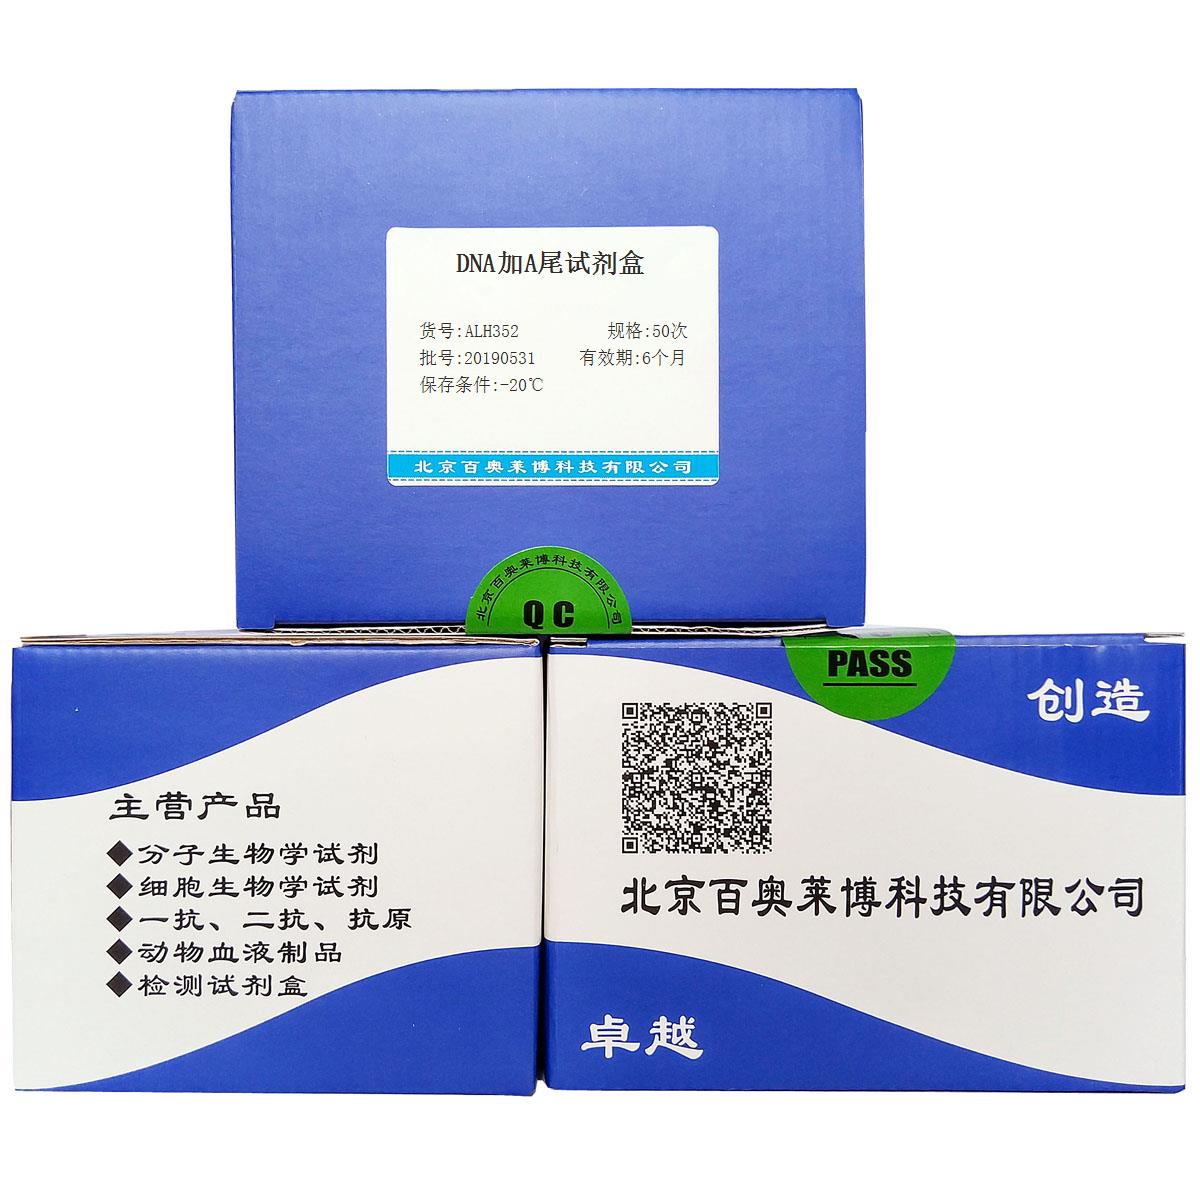 DNA加A尾试剂盒北京品牌